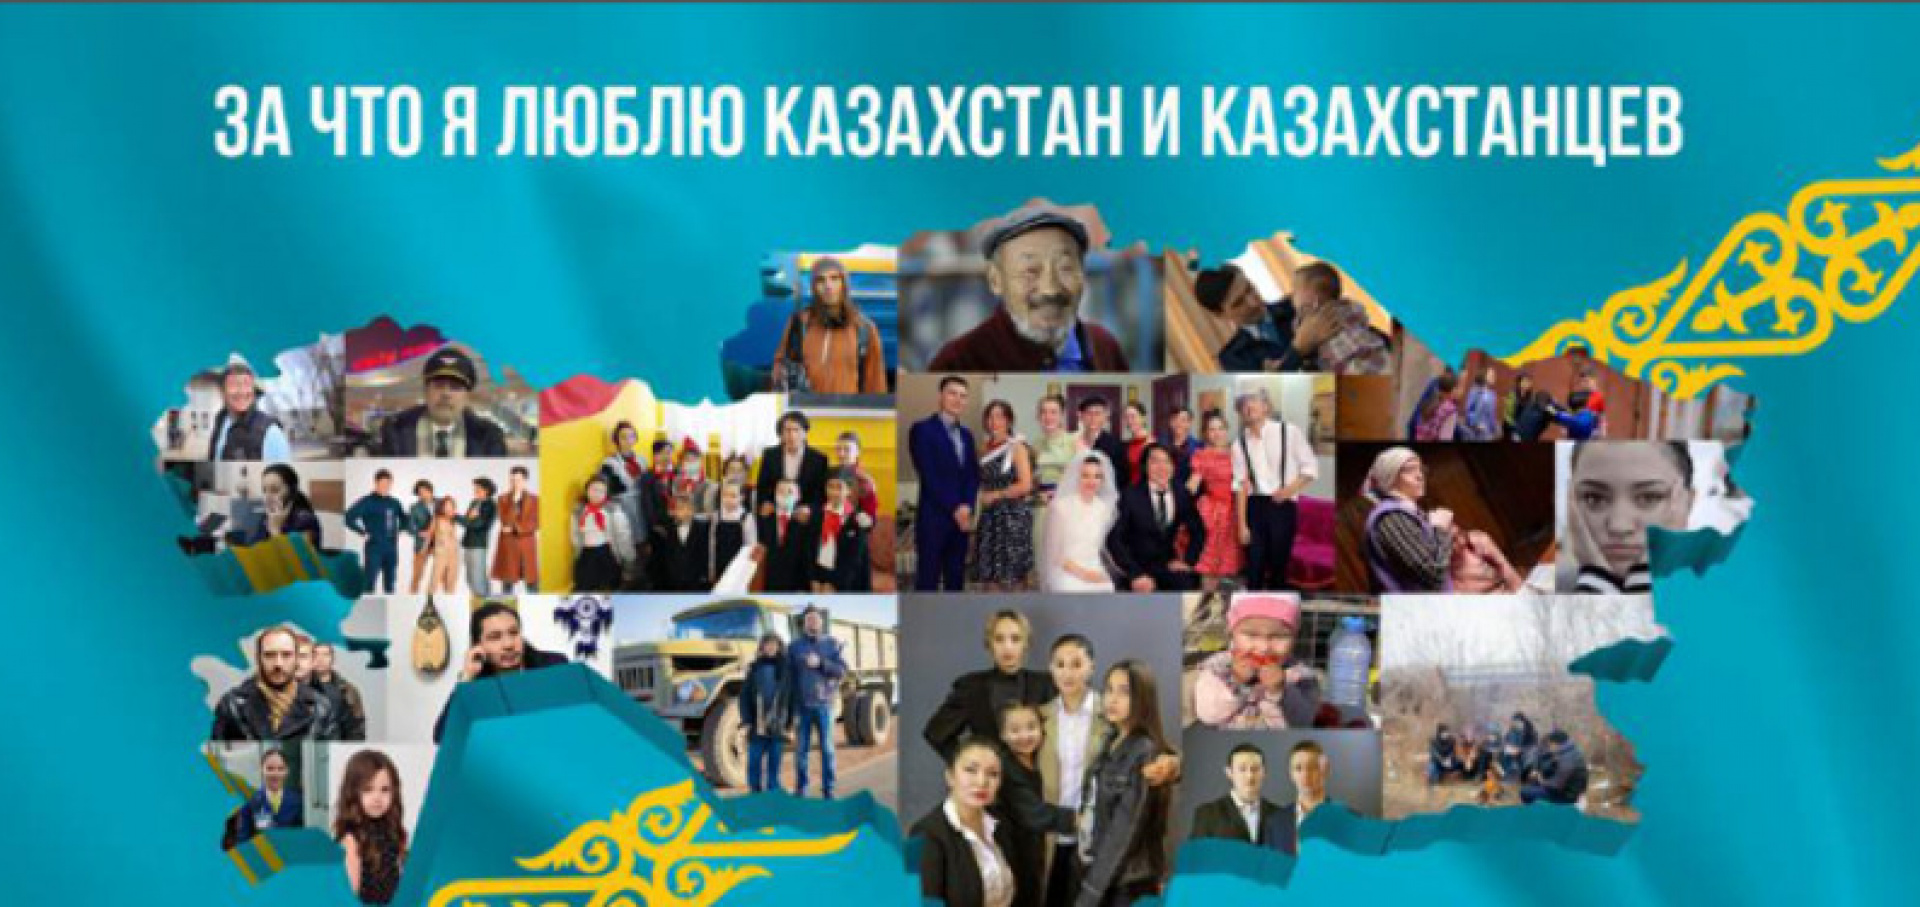 Why I love Kazakhstan and Kazakhs